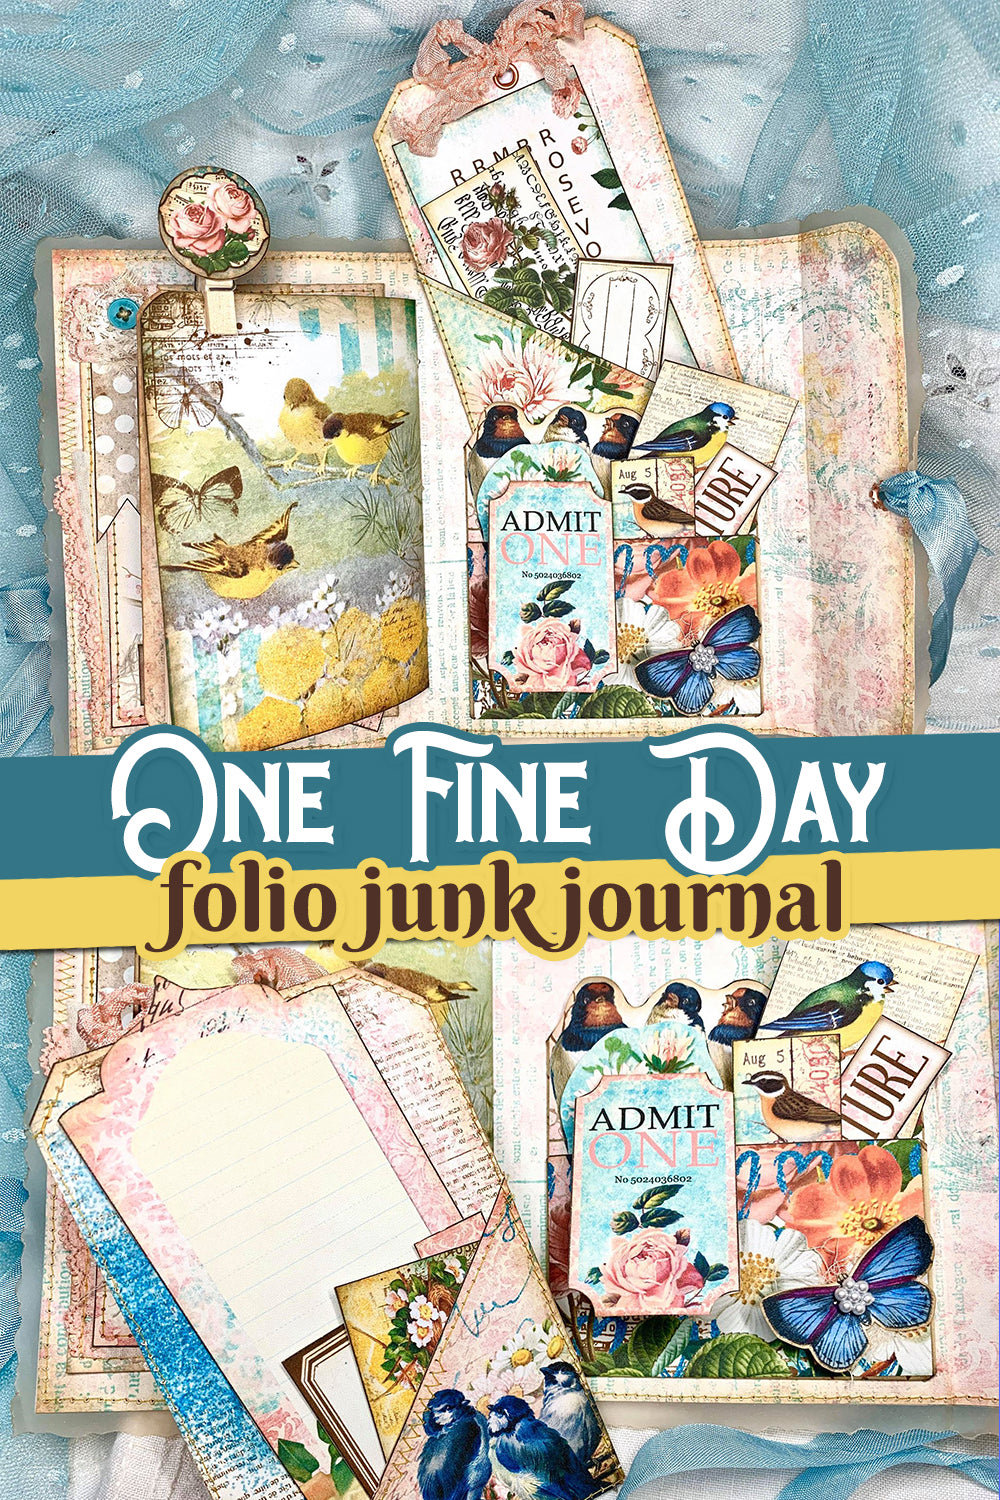 One Fine Day Junk Journal Folio Kit